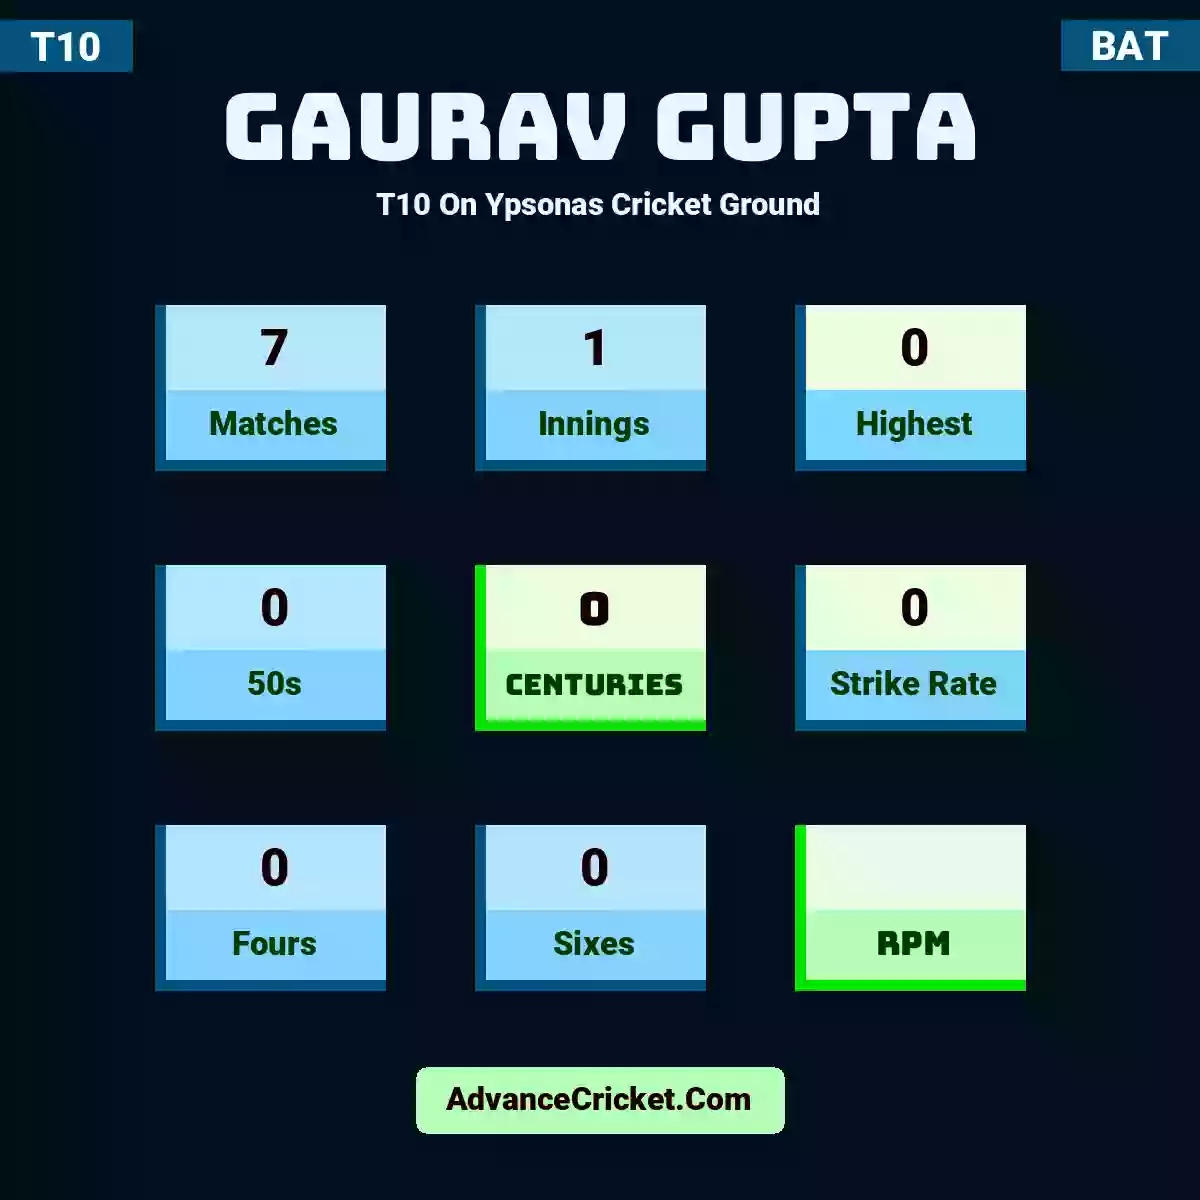 Gaurav Gupta T10  On Ypsonas Cricket Ground, Gaurav Gupta played 7 matches, scored 0 runs as highest, 0 half-centuries, and 0 centuries, with a strike rate of 0. G.Gupta hit 0 fours and 0 sixes.